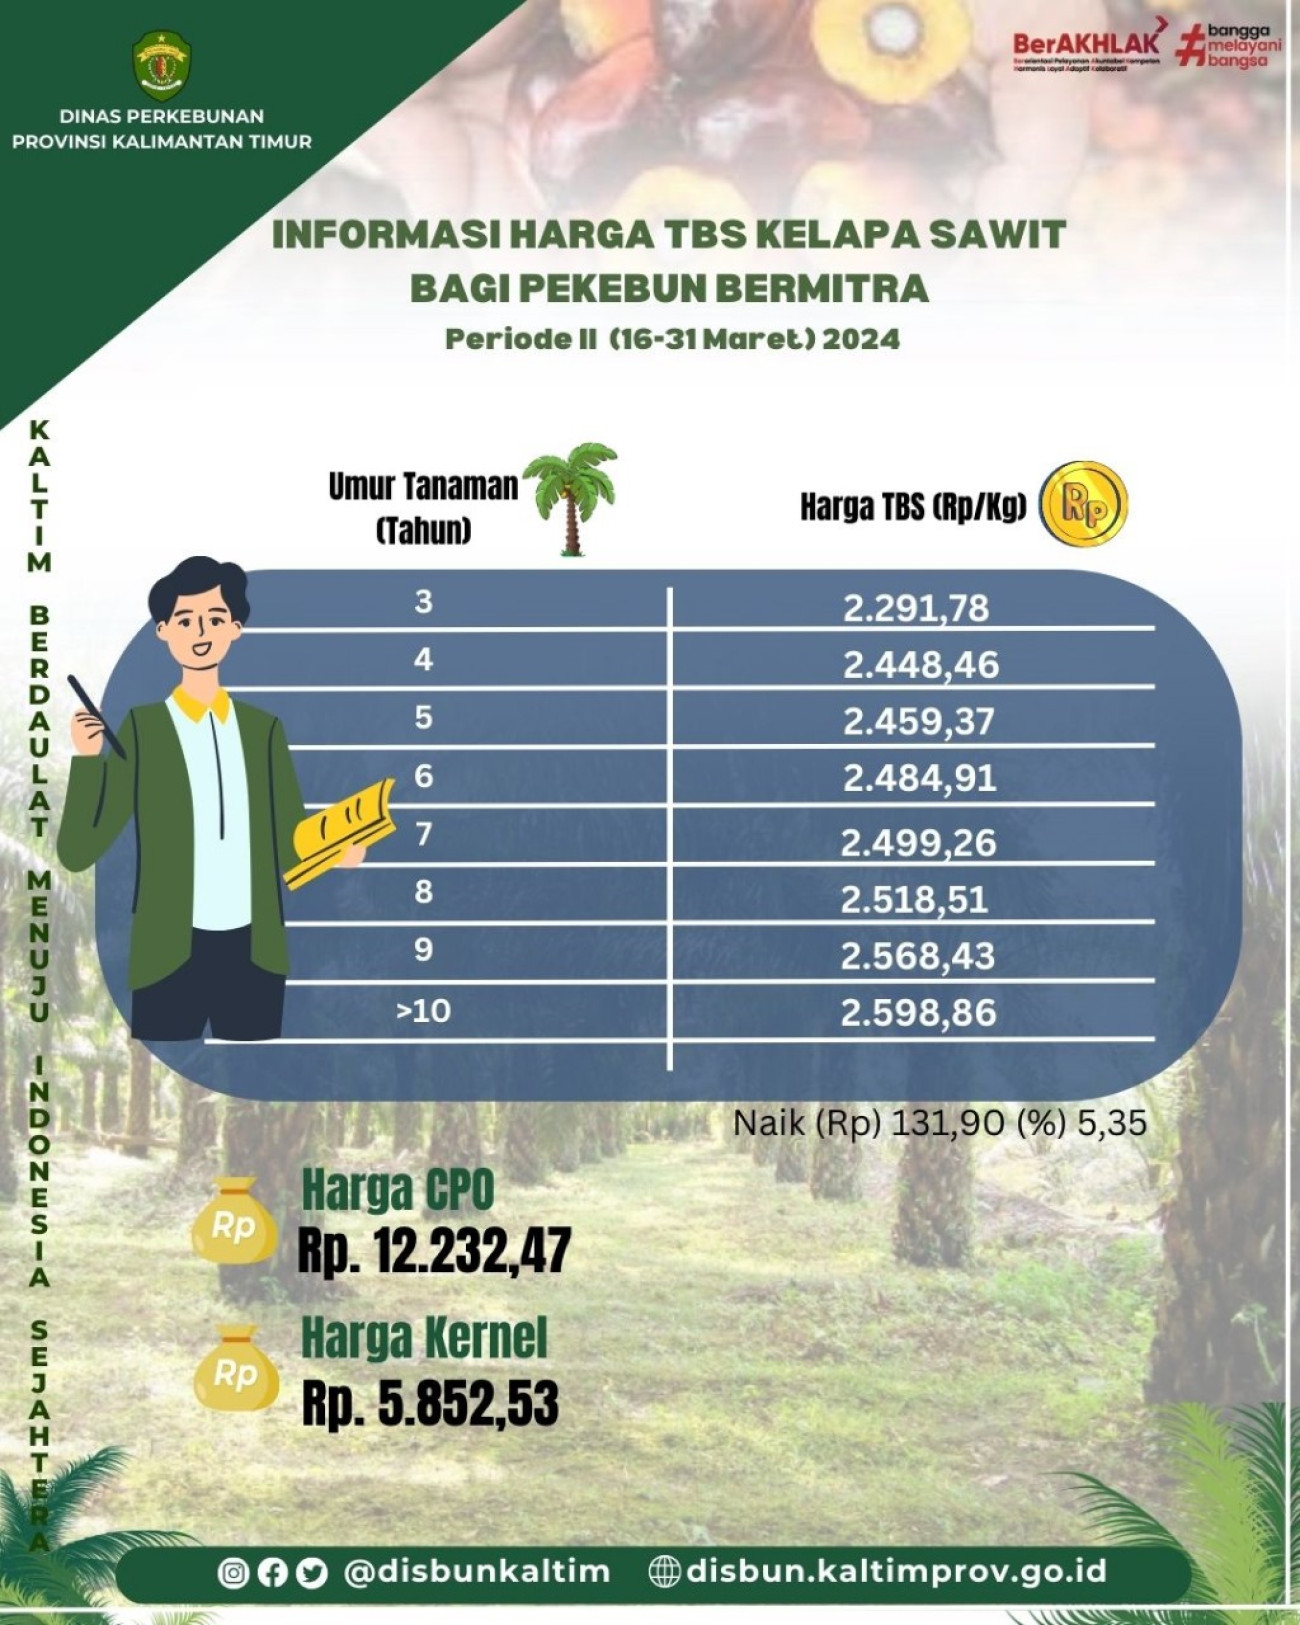 Informasi Harga TBS Kelapa Sawit bagi Pekebun Mitra Periode II Bulan Maret 2024